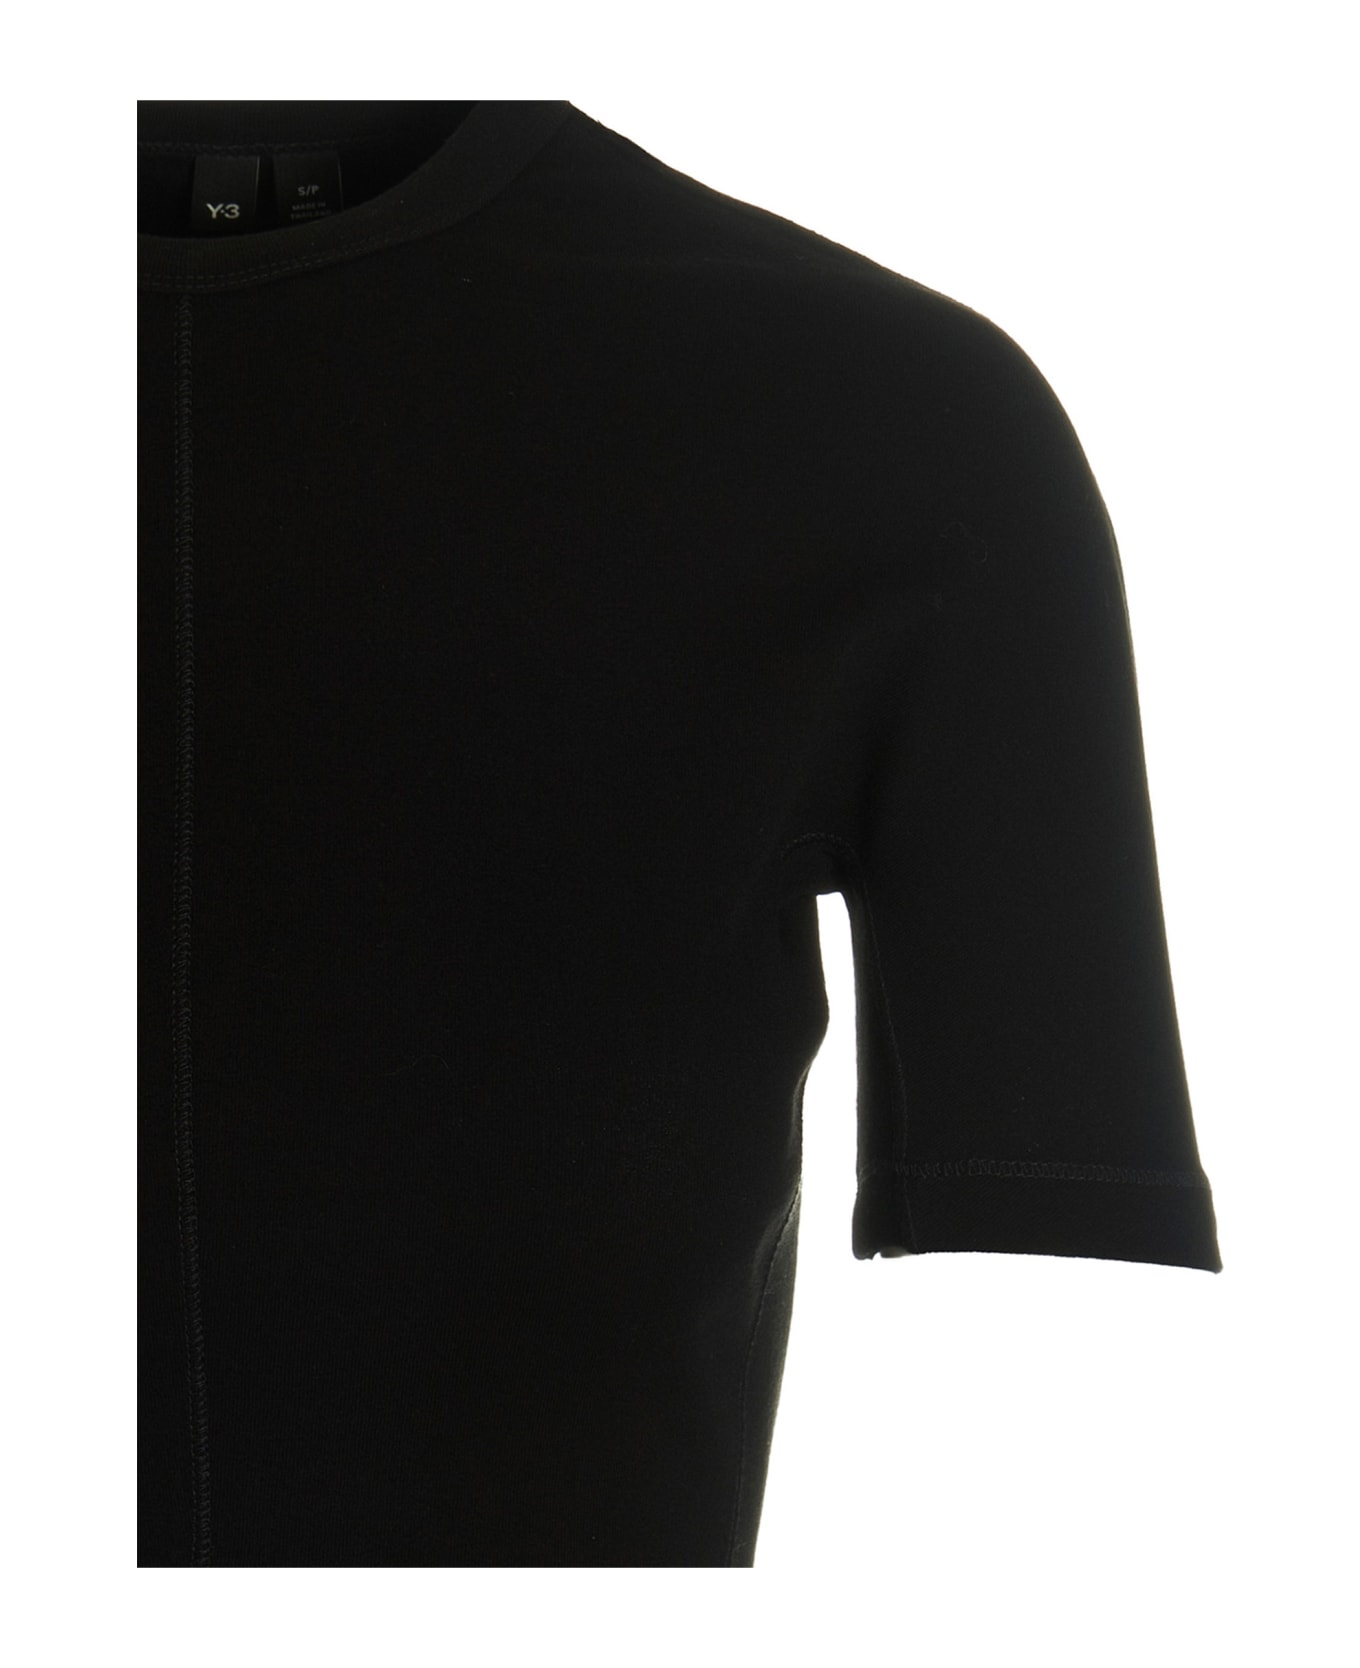 Y-3 Logo T-shrit - Black   Tシャツ